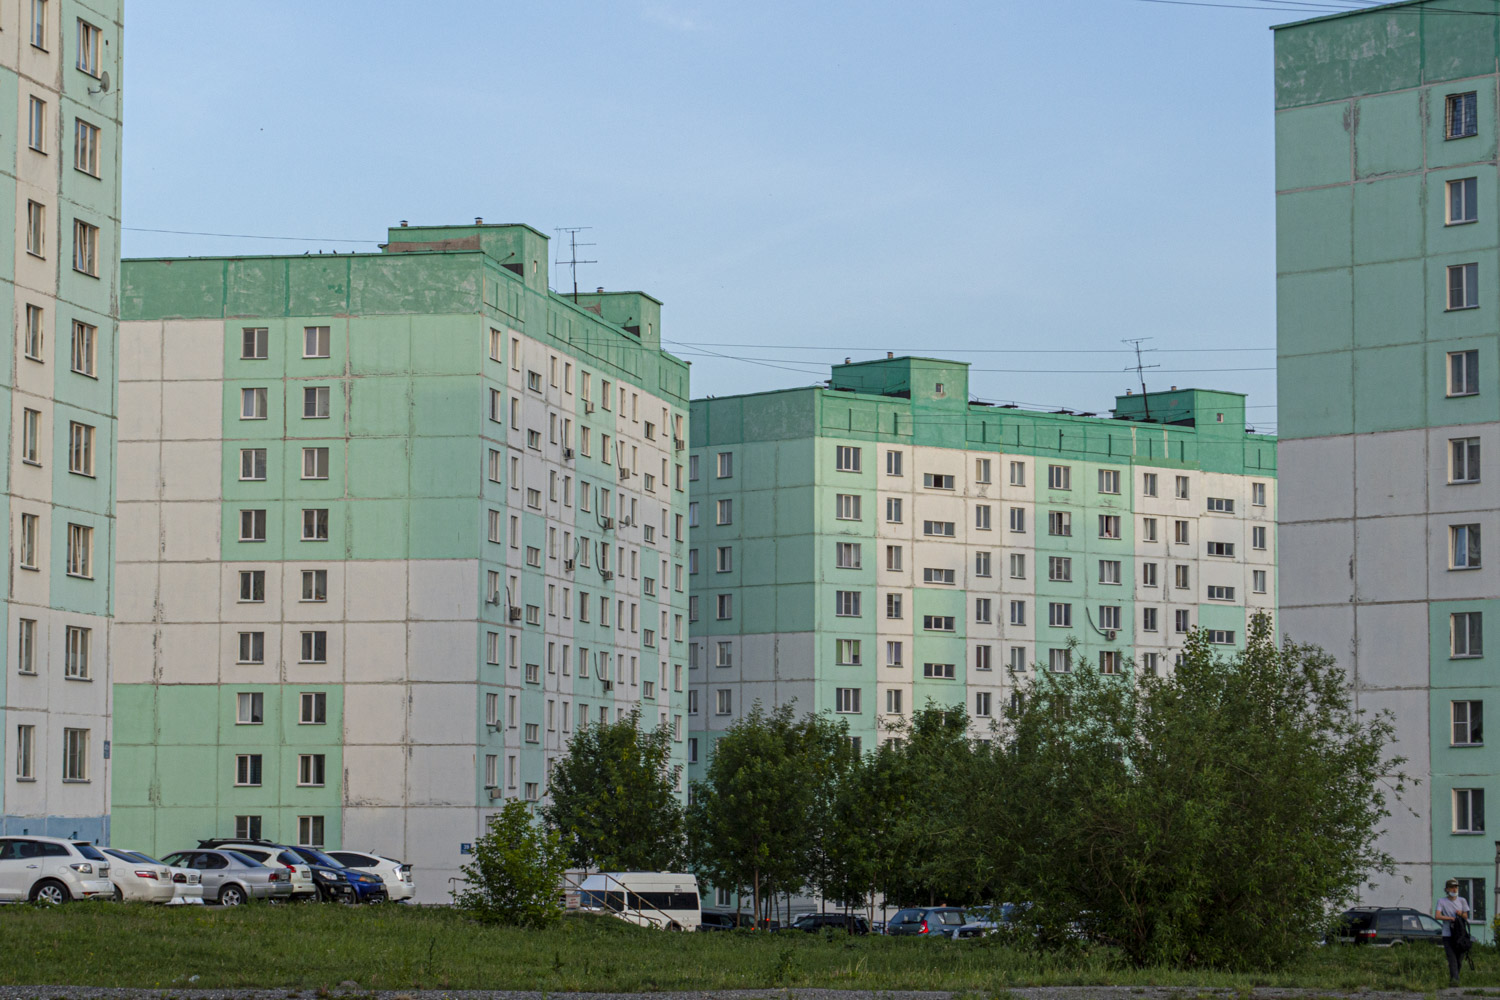 Nowosibirsk, Улица Татьяны Снежиной, 39 (подъезд 1-2); Улица Татьяны Снежиной, 39 (подъезд 3-4)